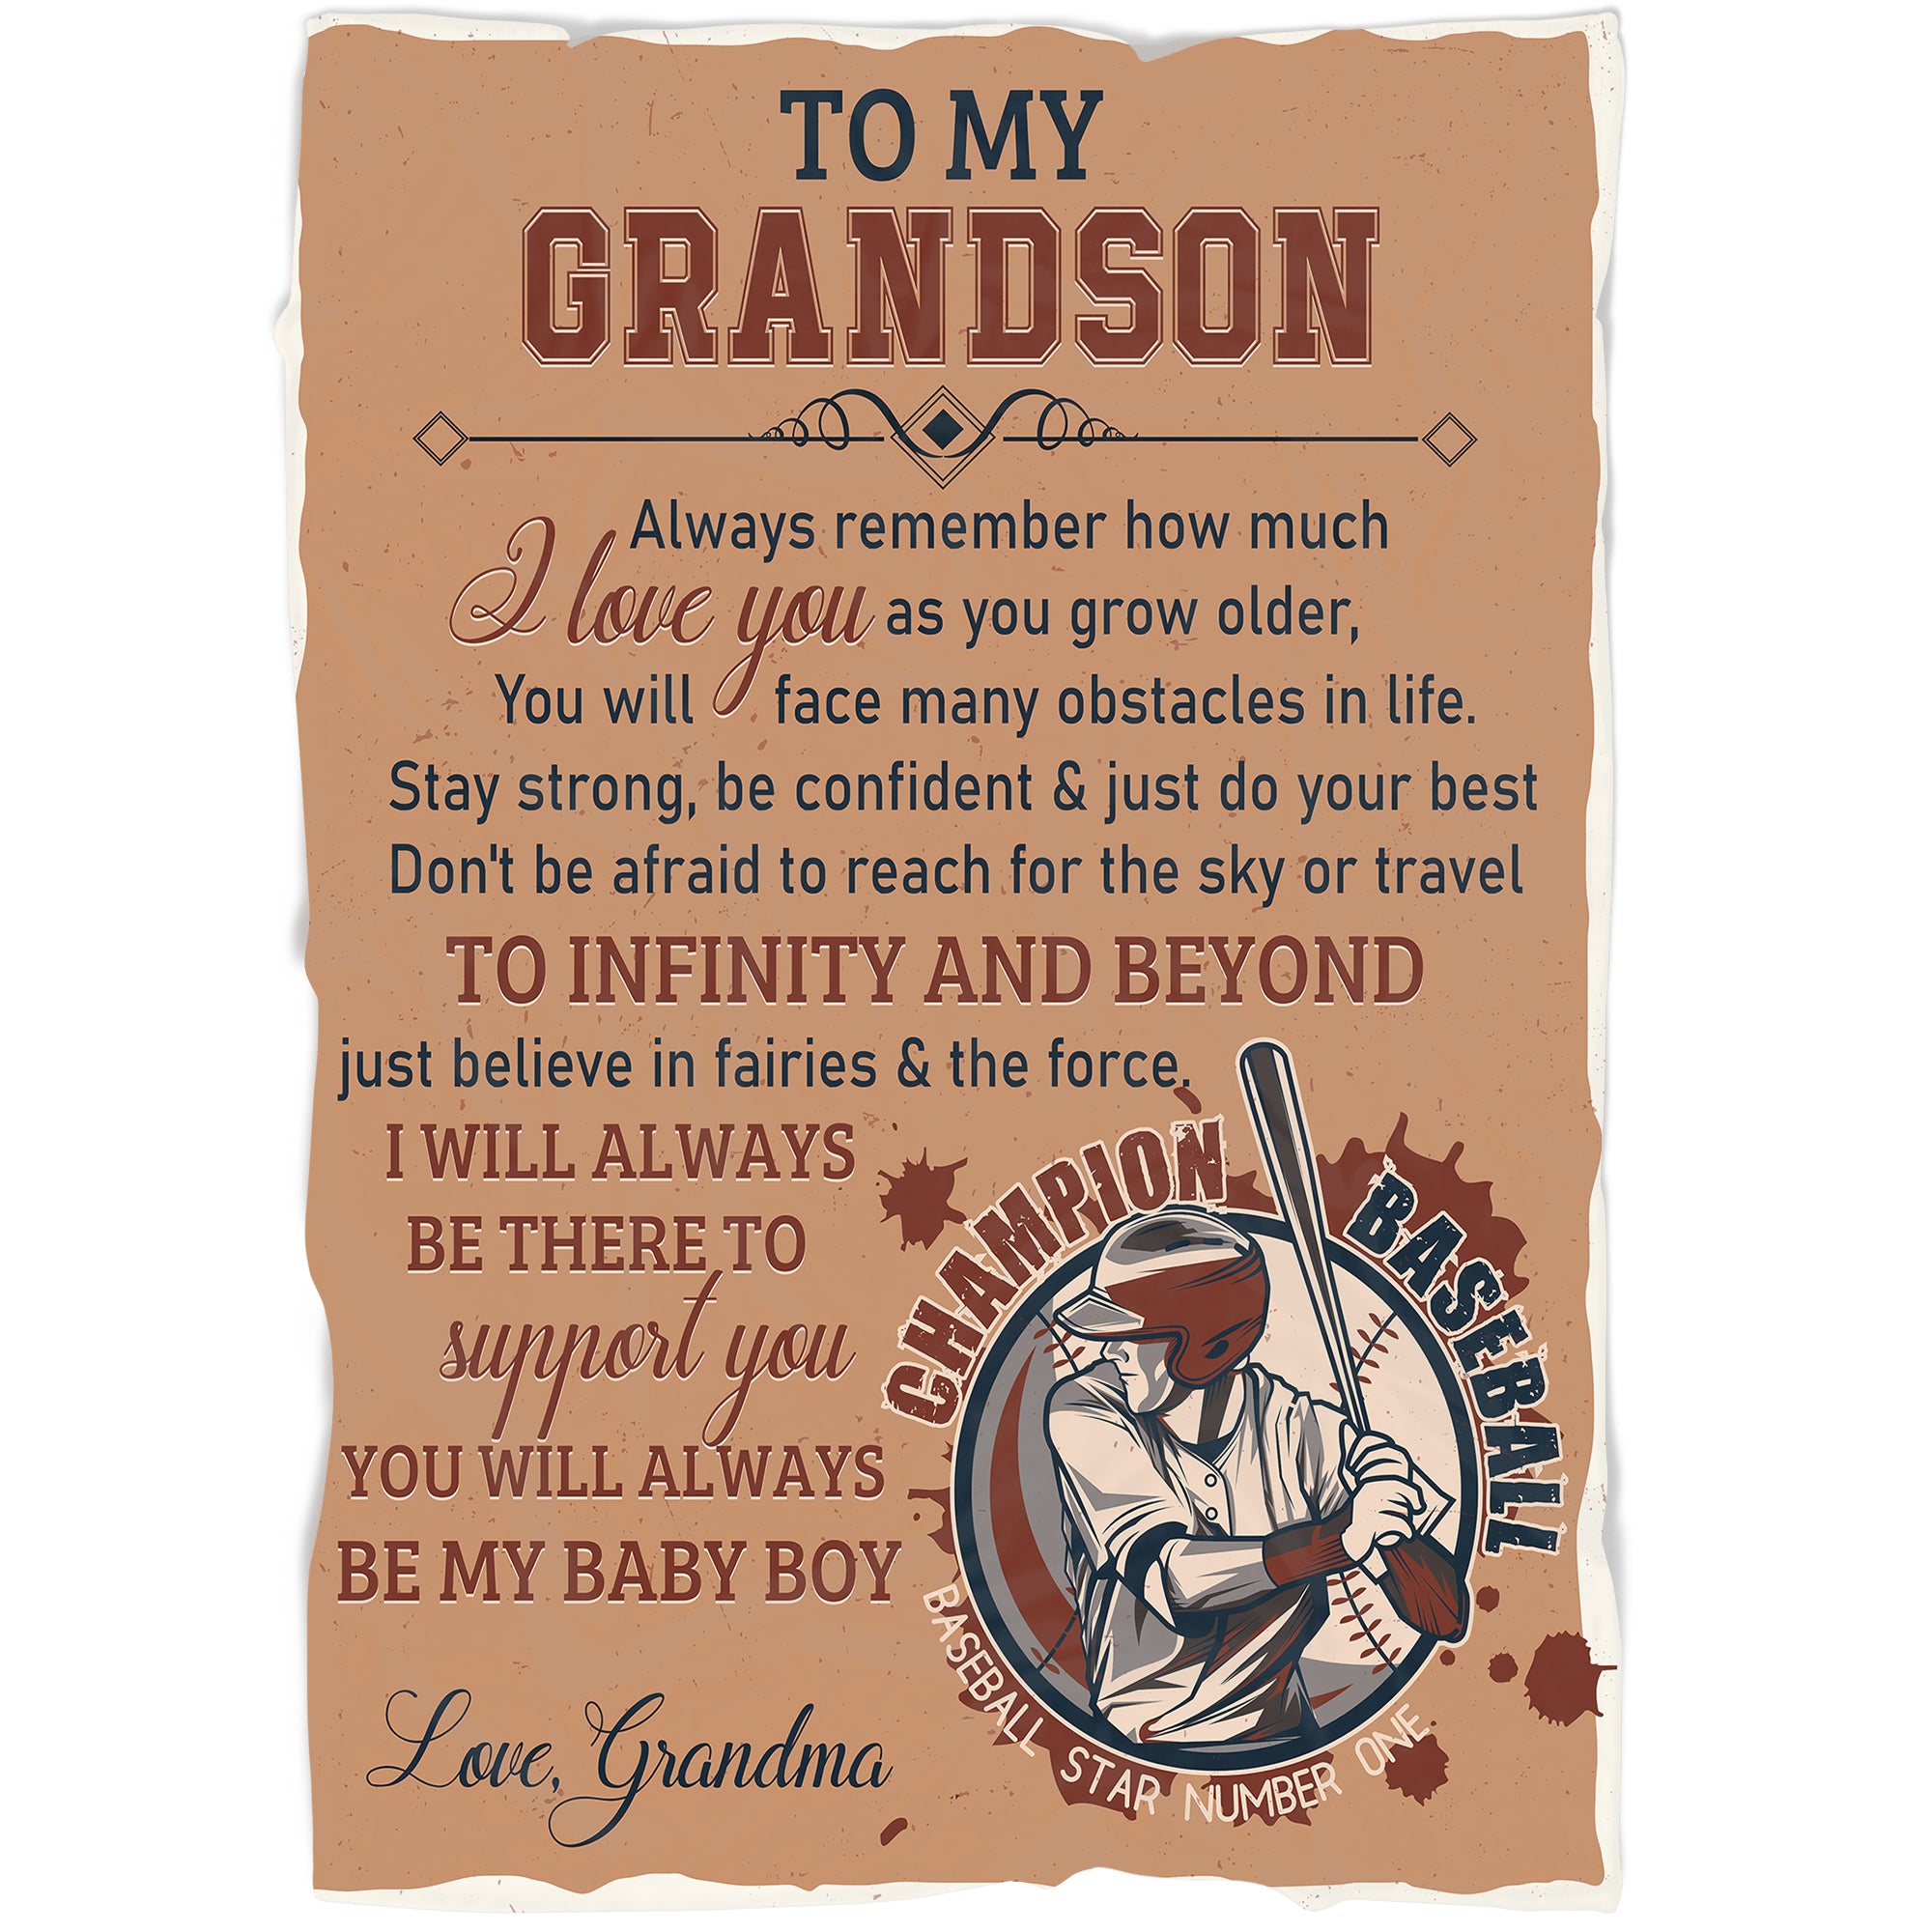 Grandson Baseball Blanket - To My Grandson Courage Fleece Throw from Grandma| T910